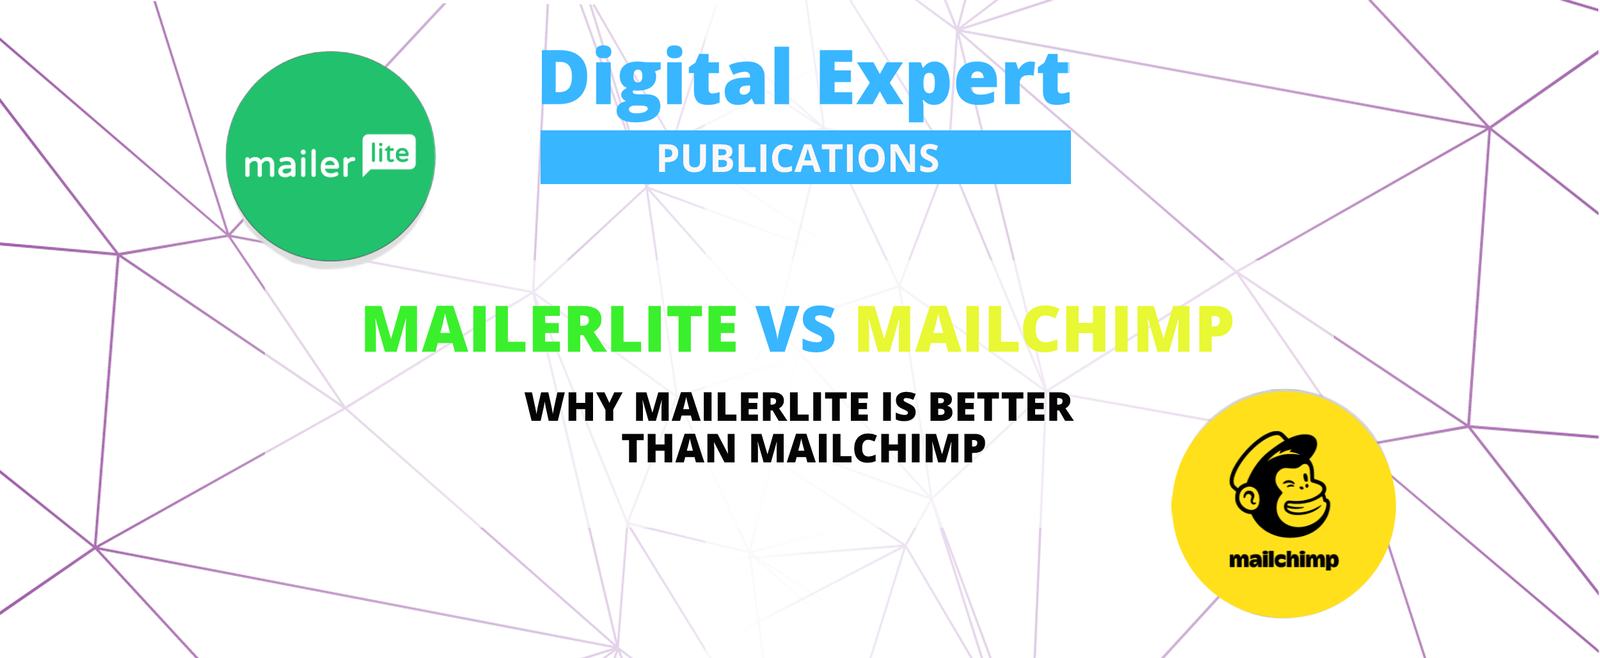 Mailerlite vs Mailchimp and why MailerLite is better than Mailchimp, service comparison - Digital Expert